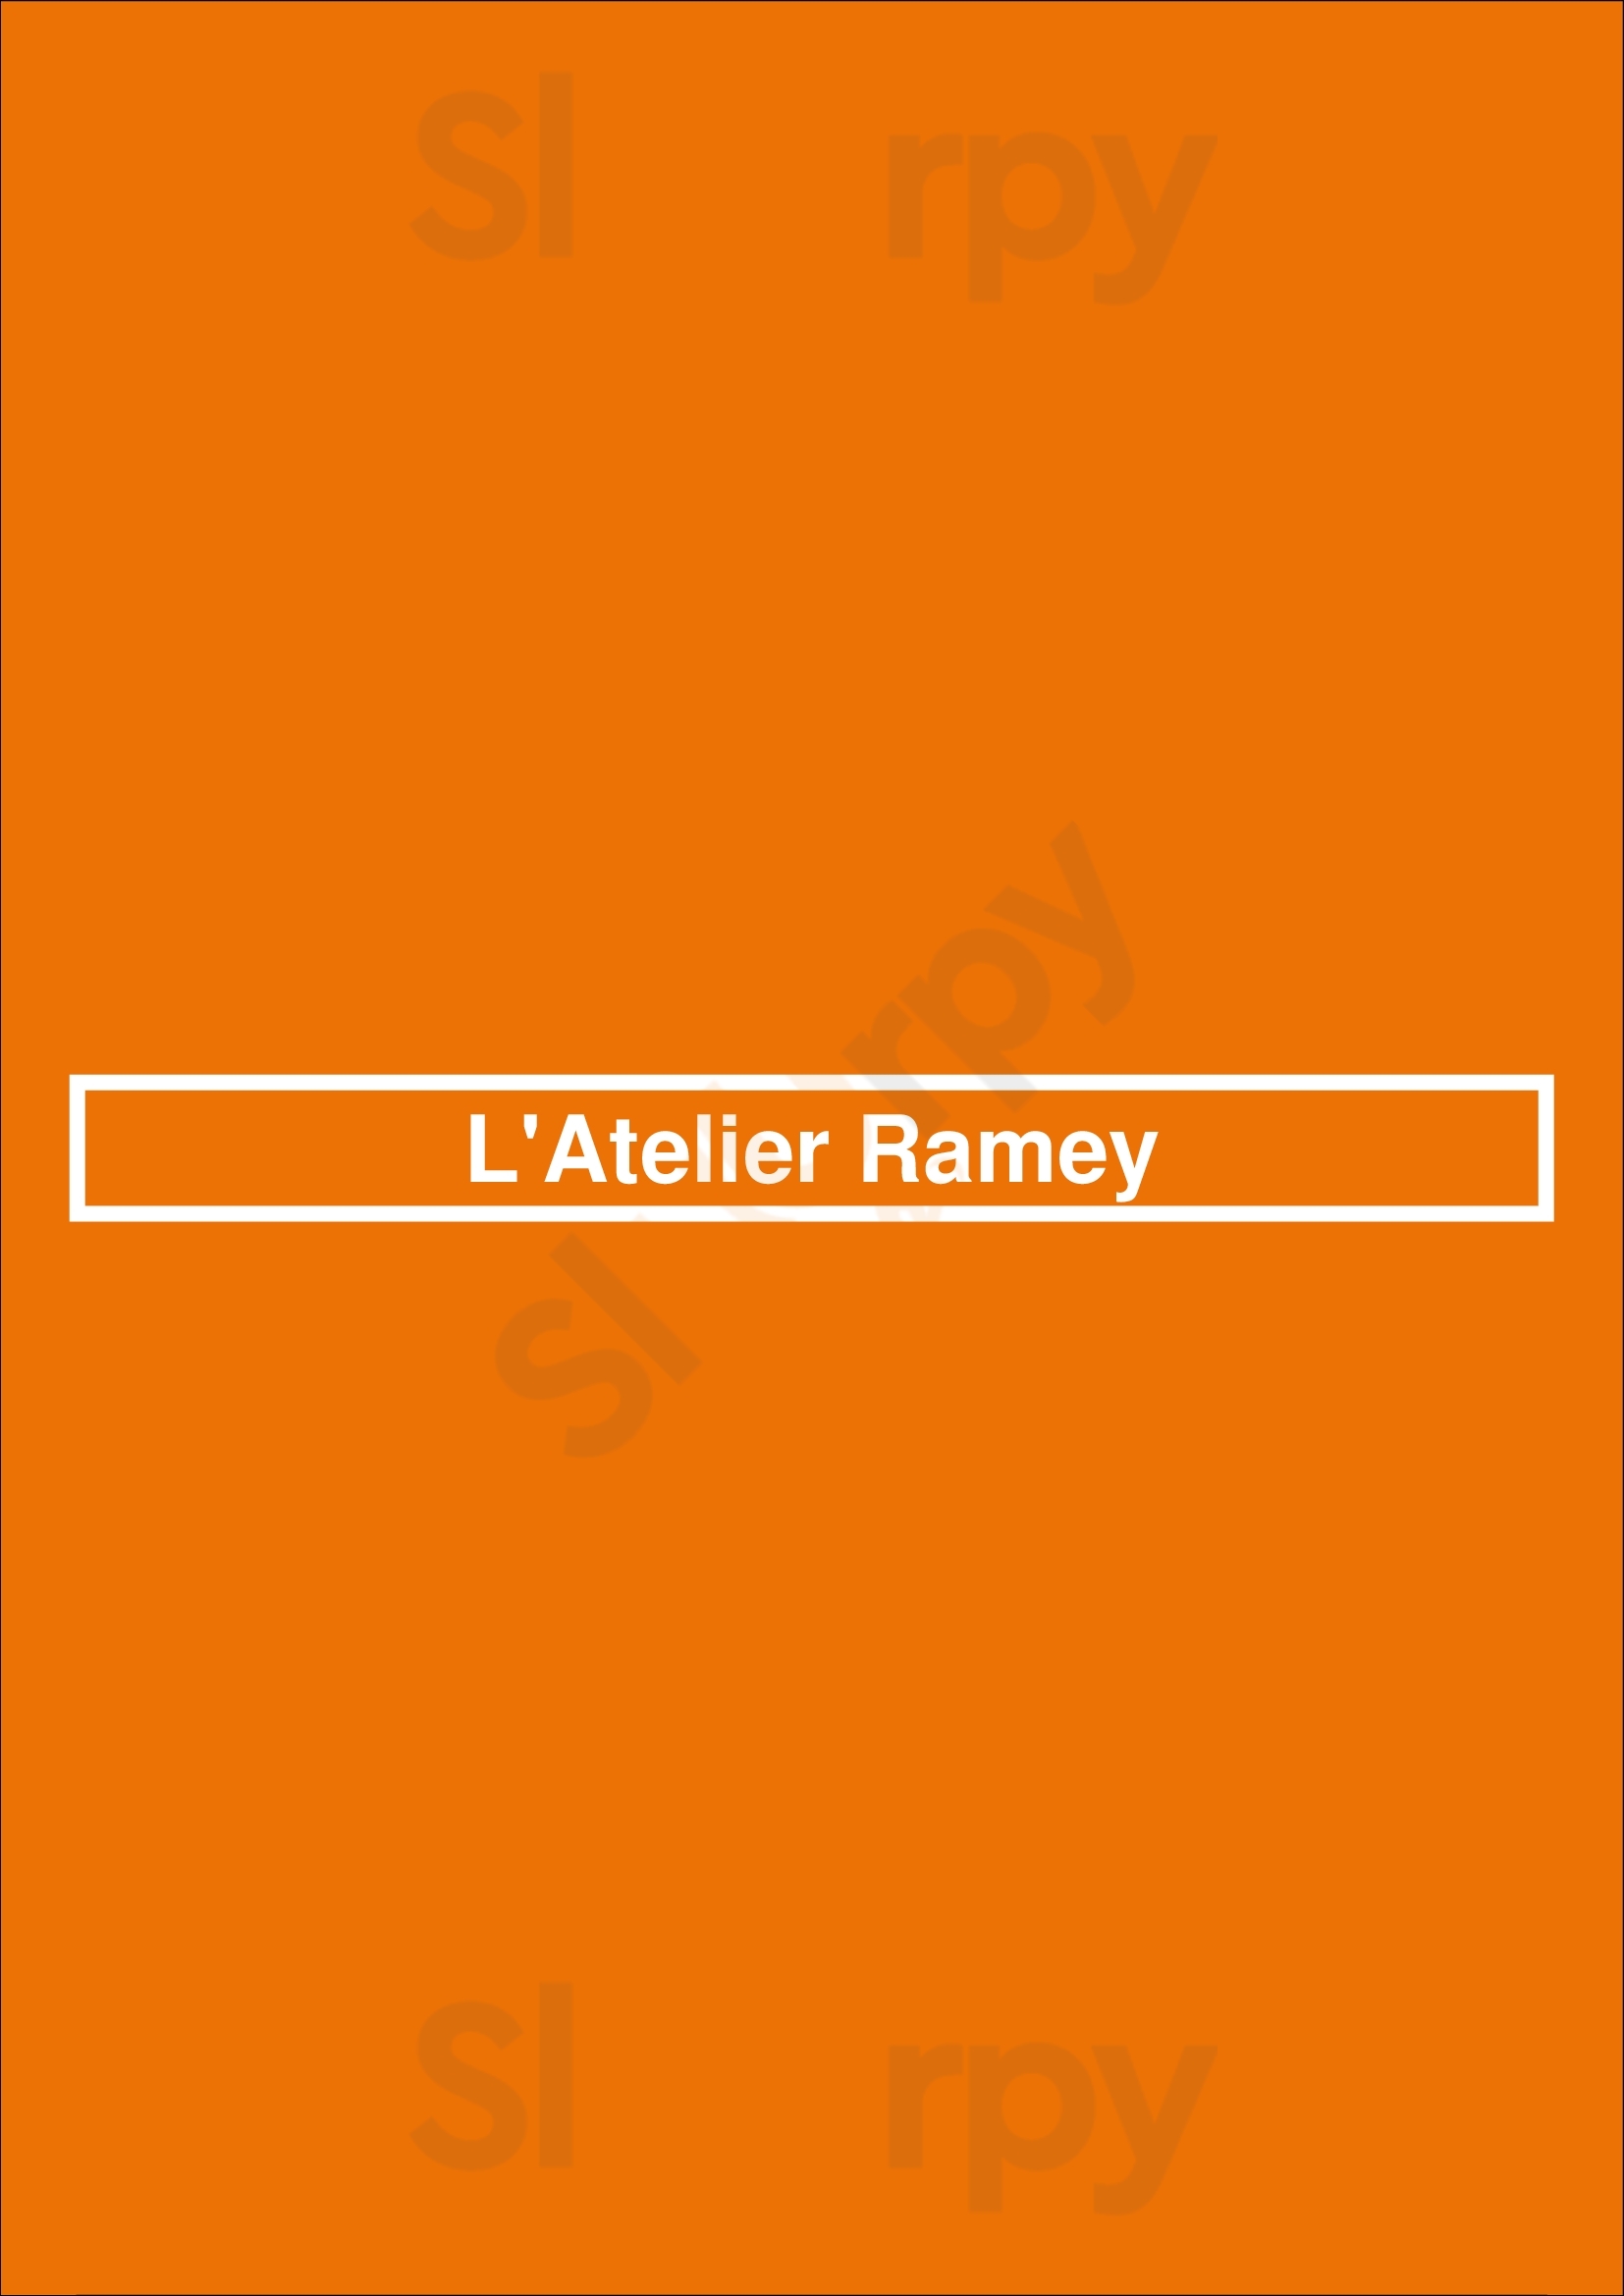 L'atelier Ramey Paris Menu - 1